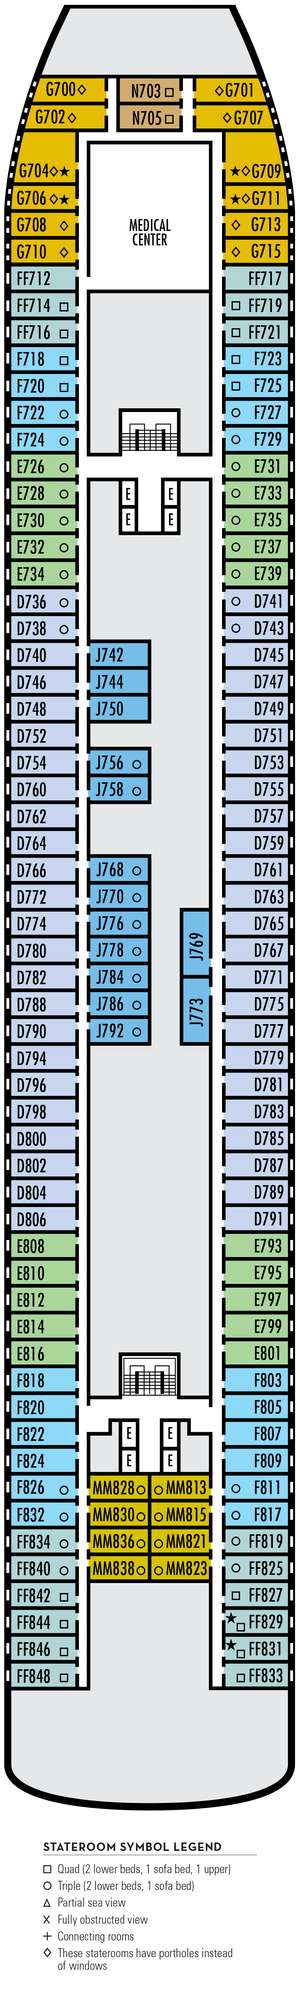 Deck plan for Veendam